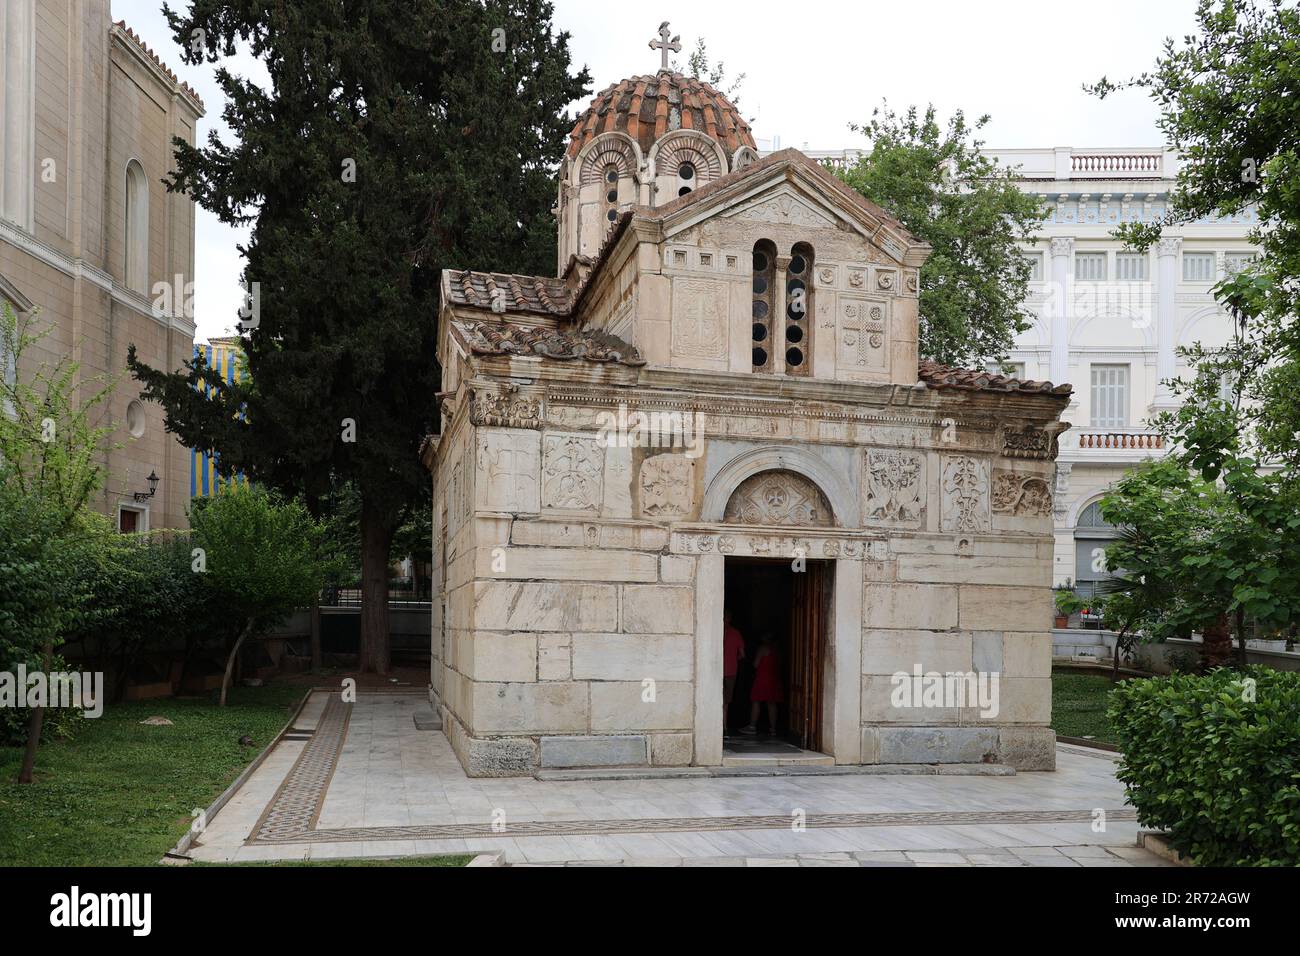 Holy Church of the Virgin Mary Gorgoepikoos and Saint Eleutherius old town of Plaka-Athens Stock Photo